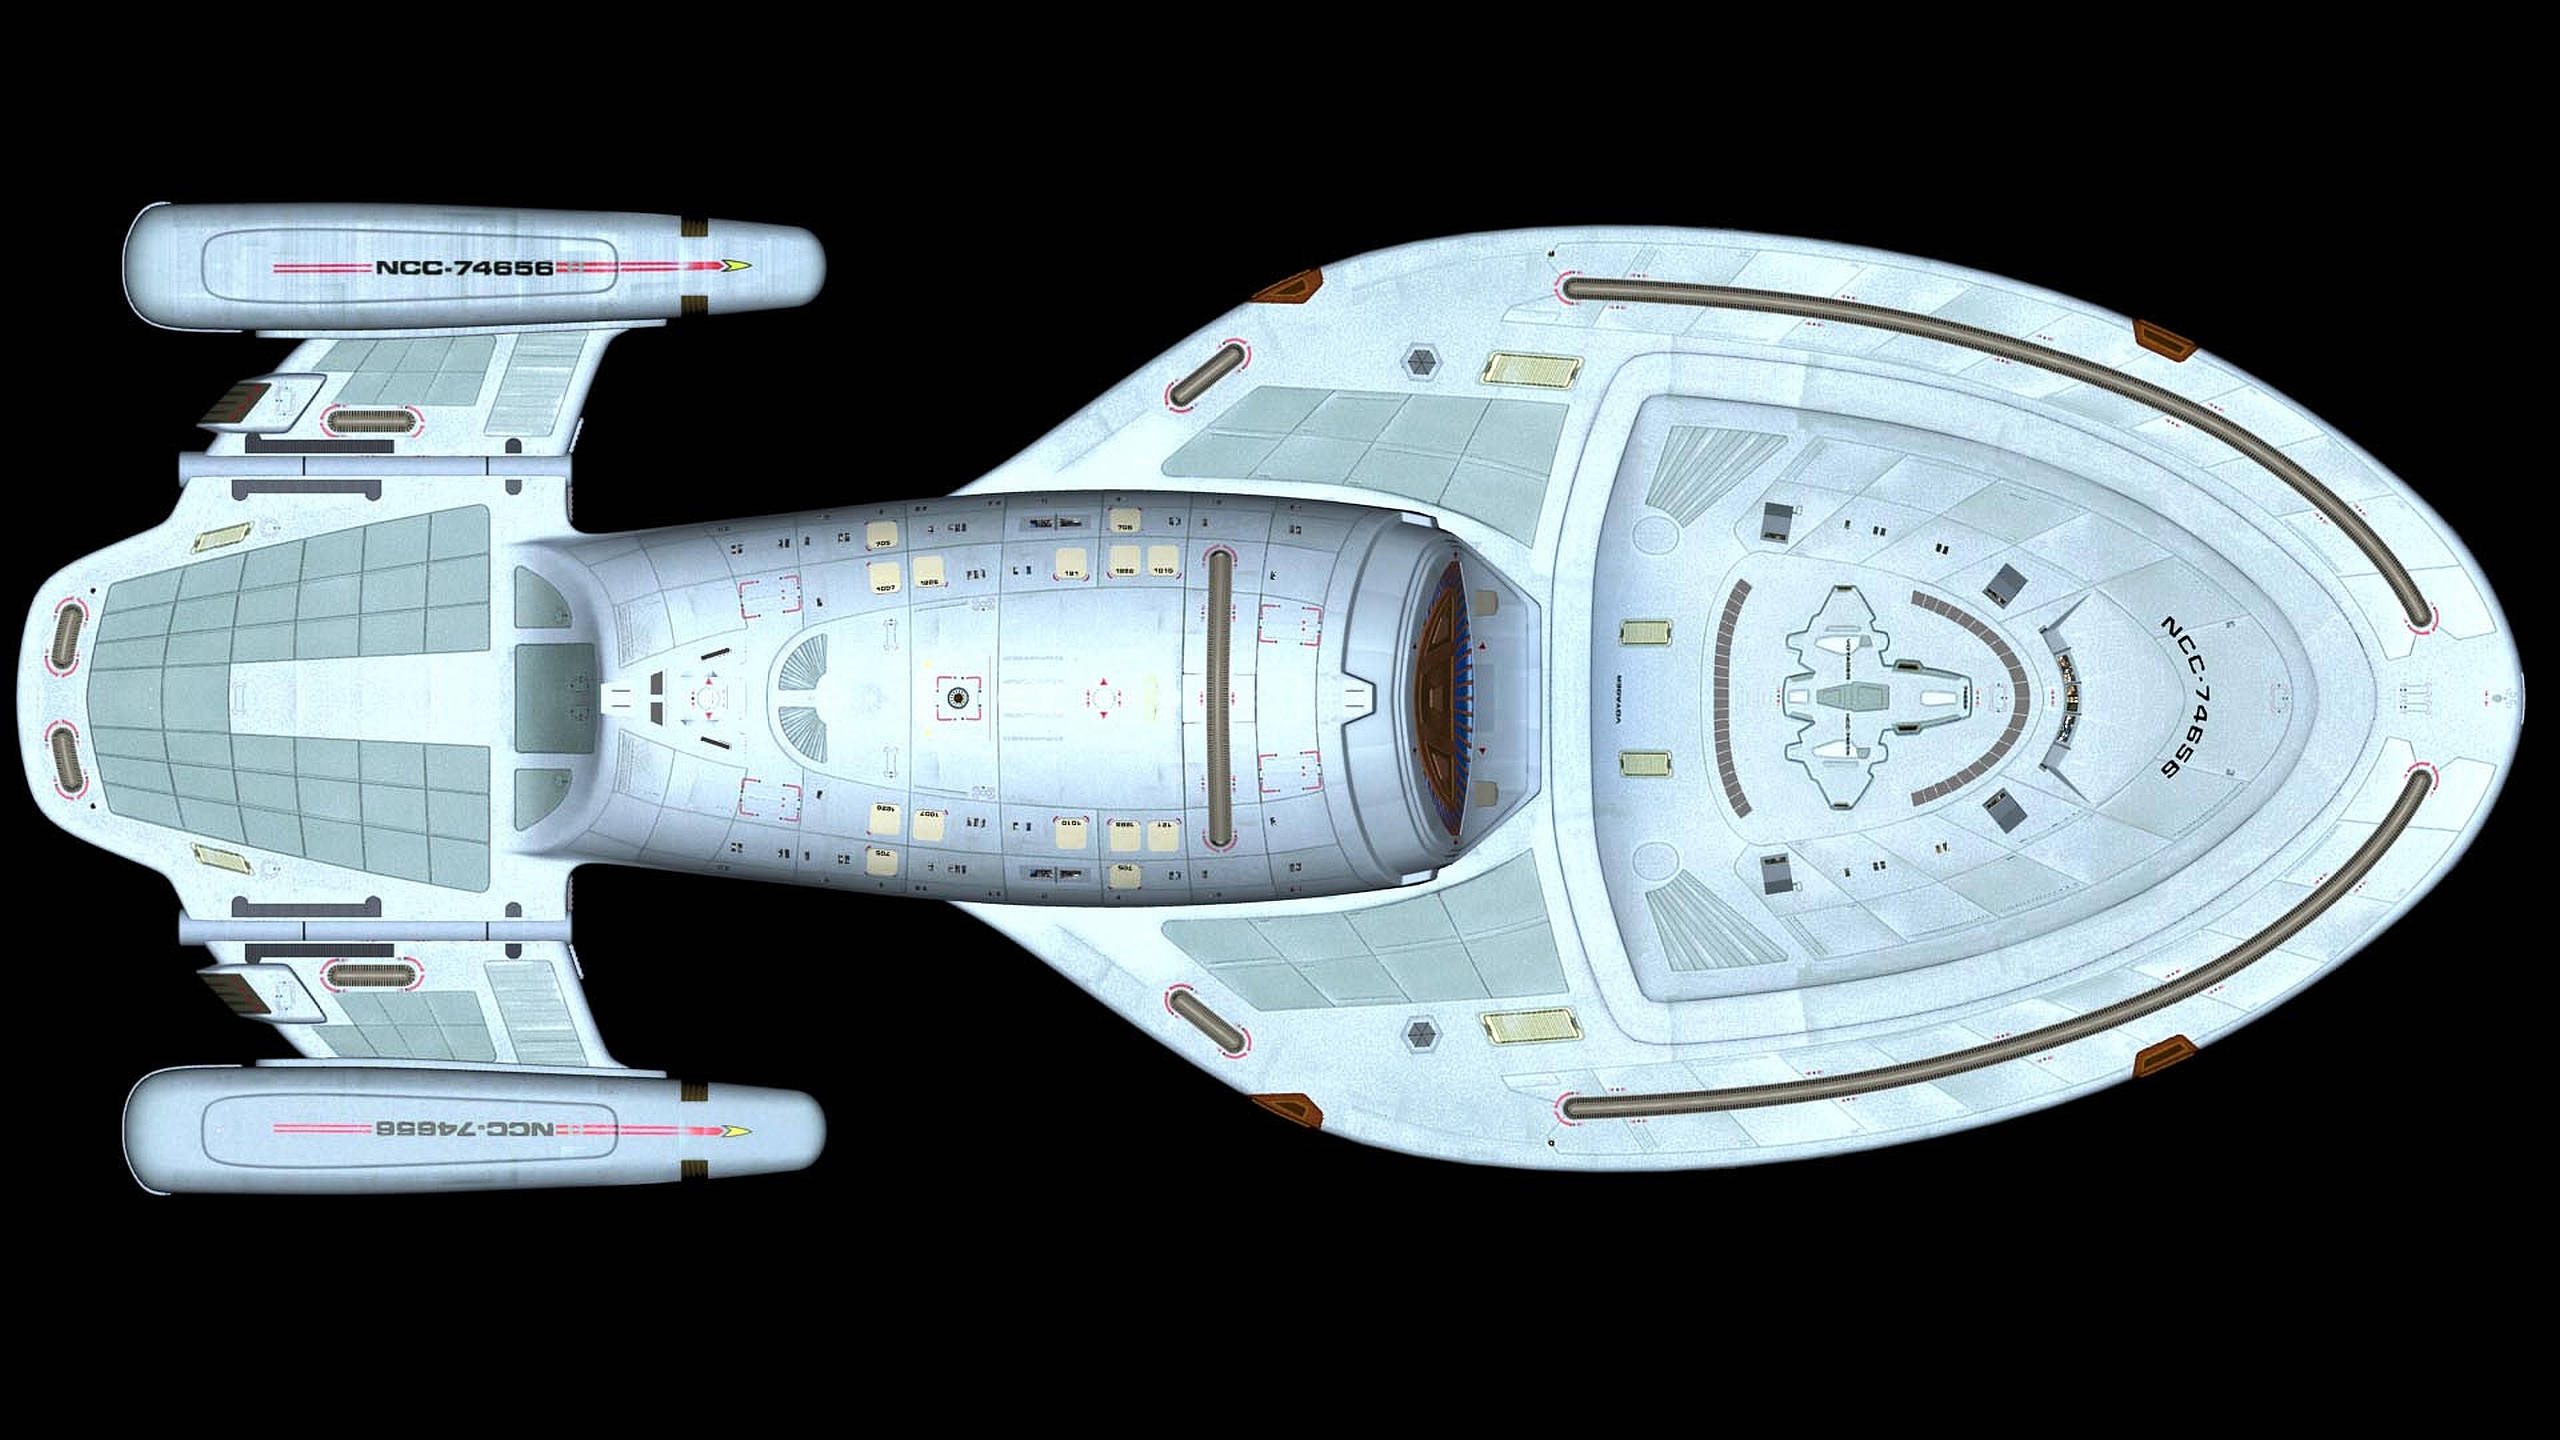 2560x1440 Download Star Trek Starship Uss Voyager Schematics Wallpaper | Wallpapers .com